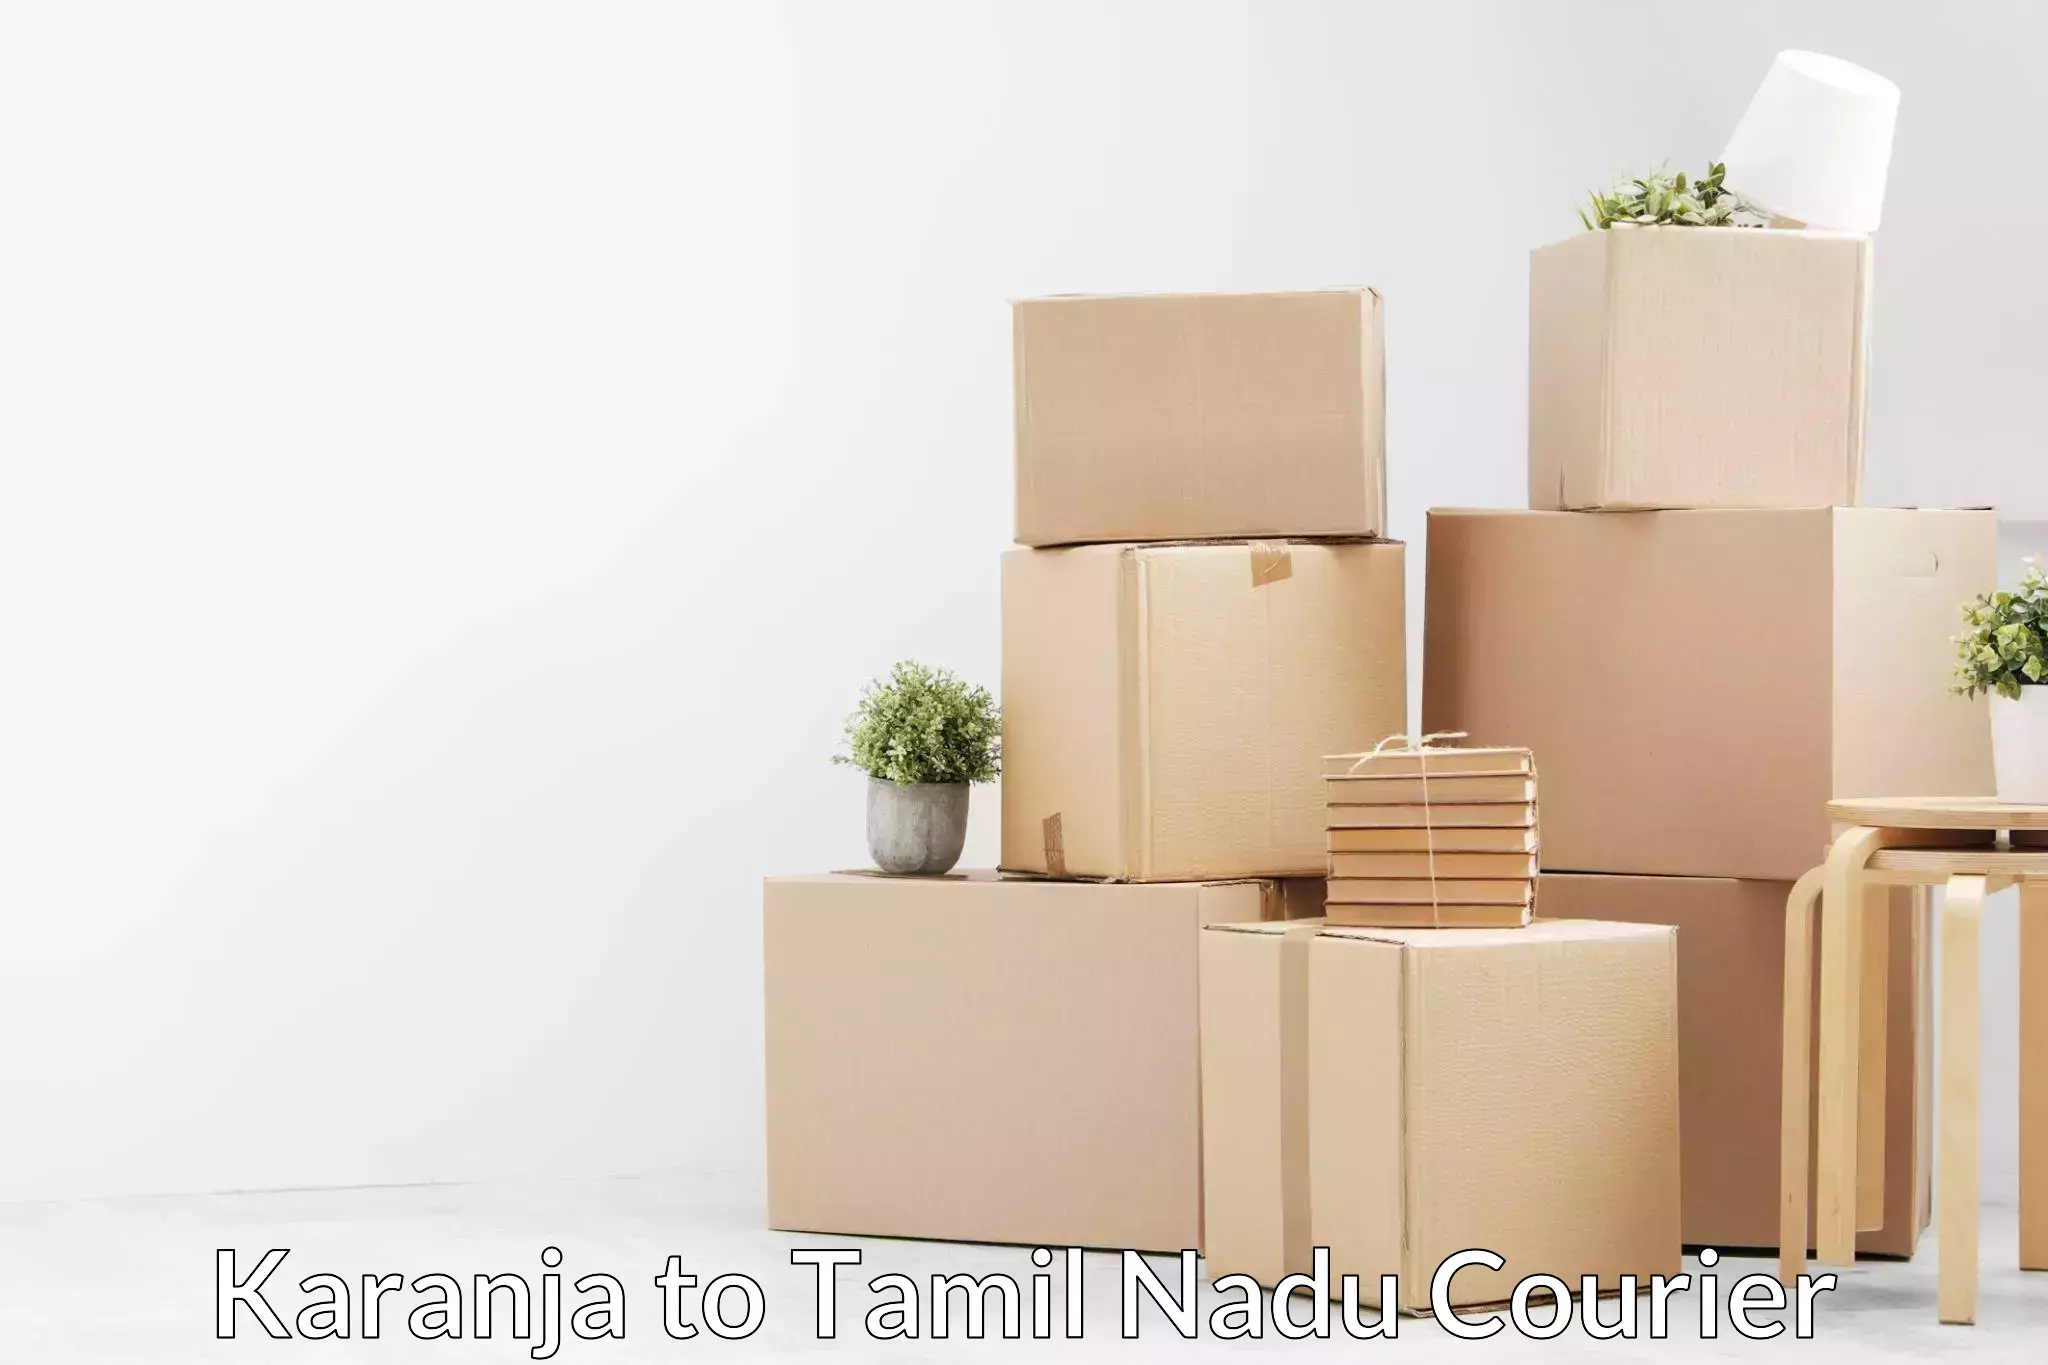 Professional home shifting in Karanja to Tamil Nadu